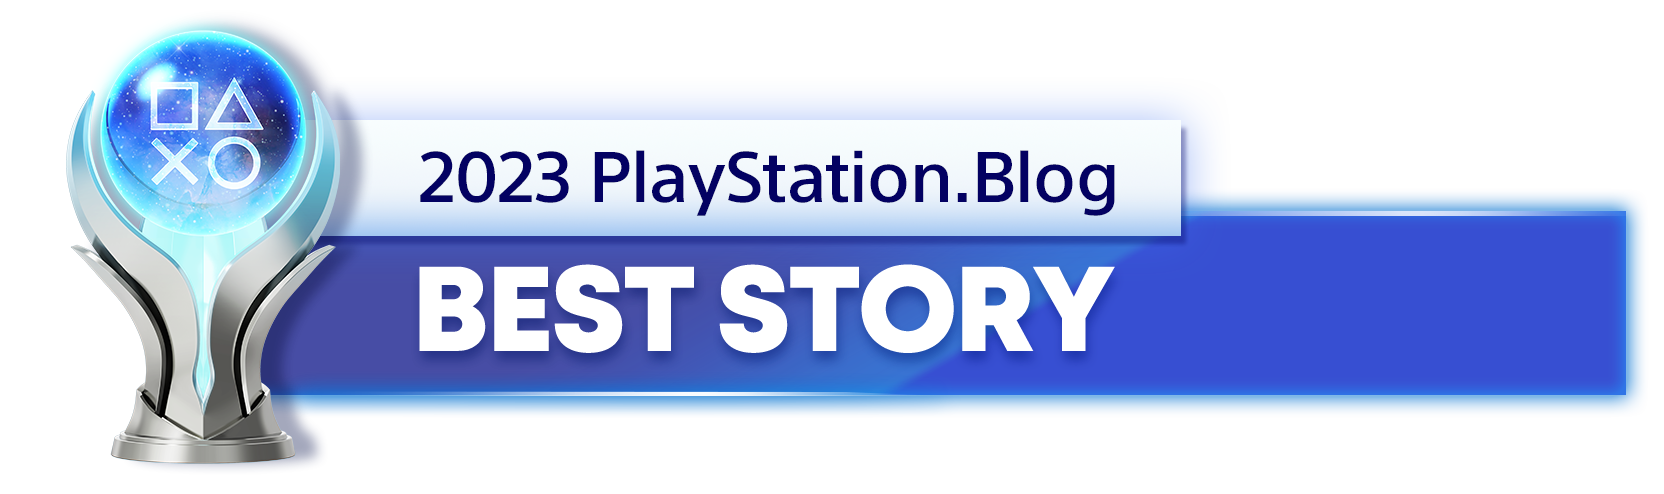  "Platinum Trophy for the 2023 PlayStation Blog Best Story Winner"